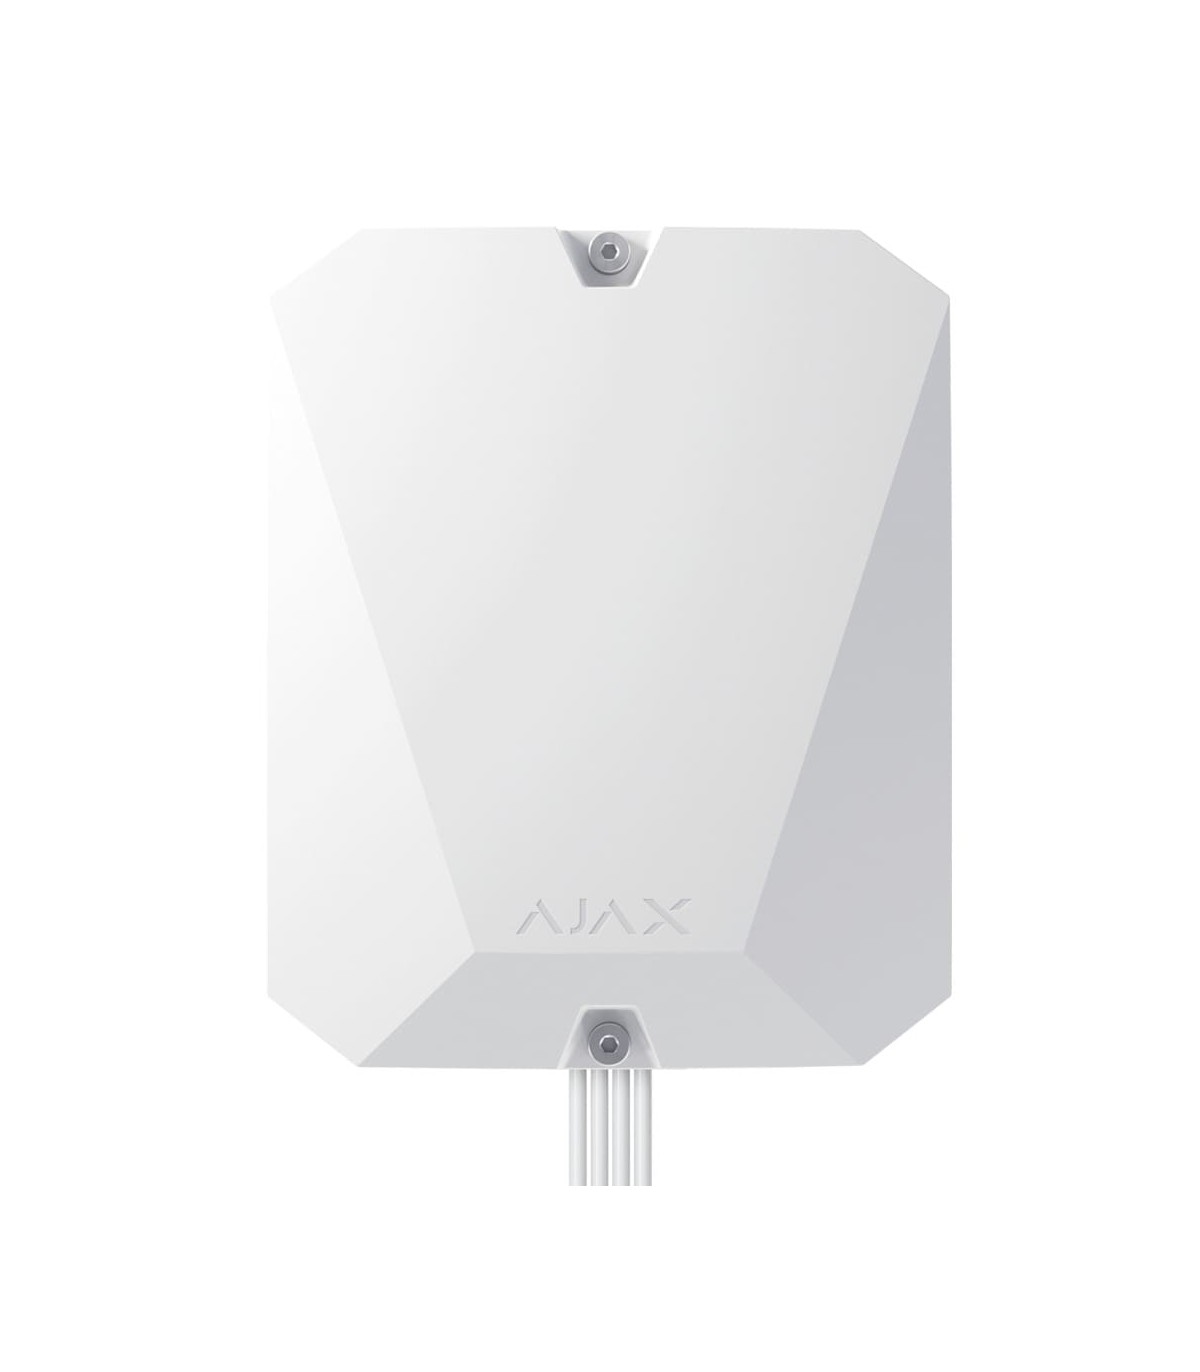 Professional AJAX Grade 3 white alarm panel